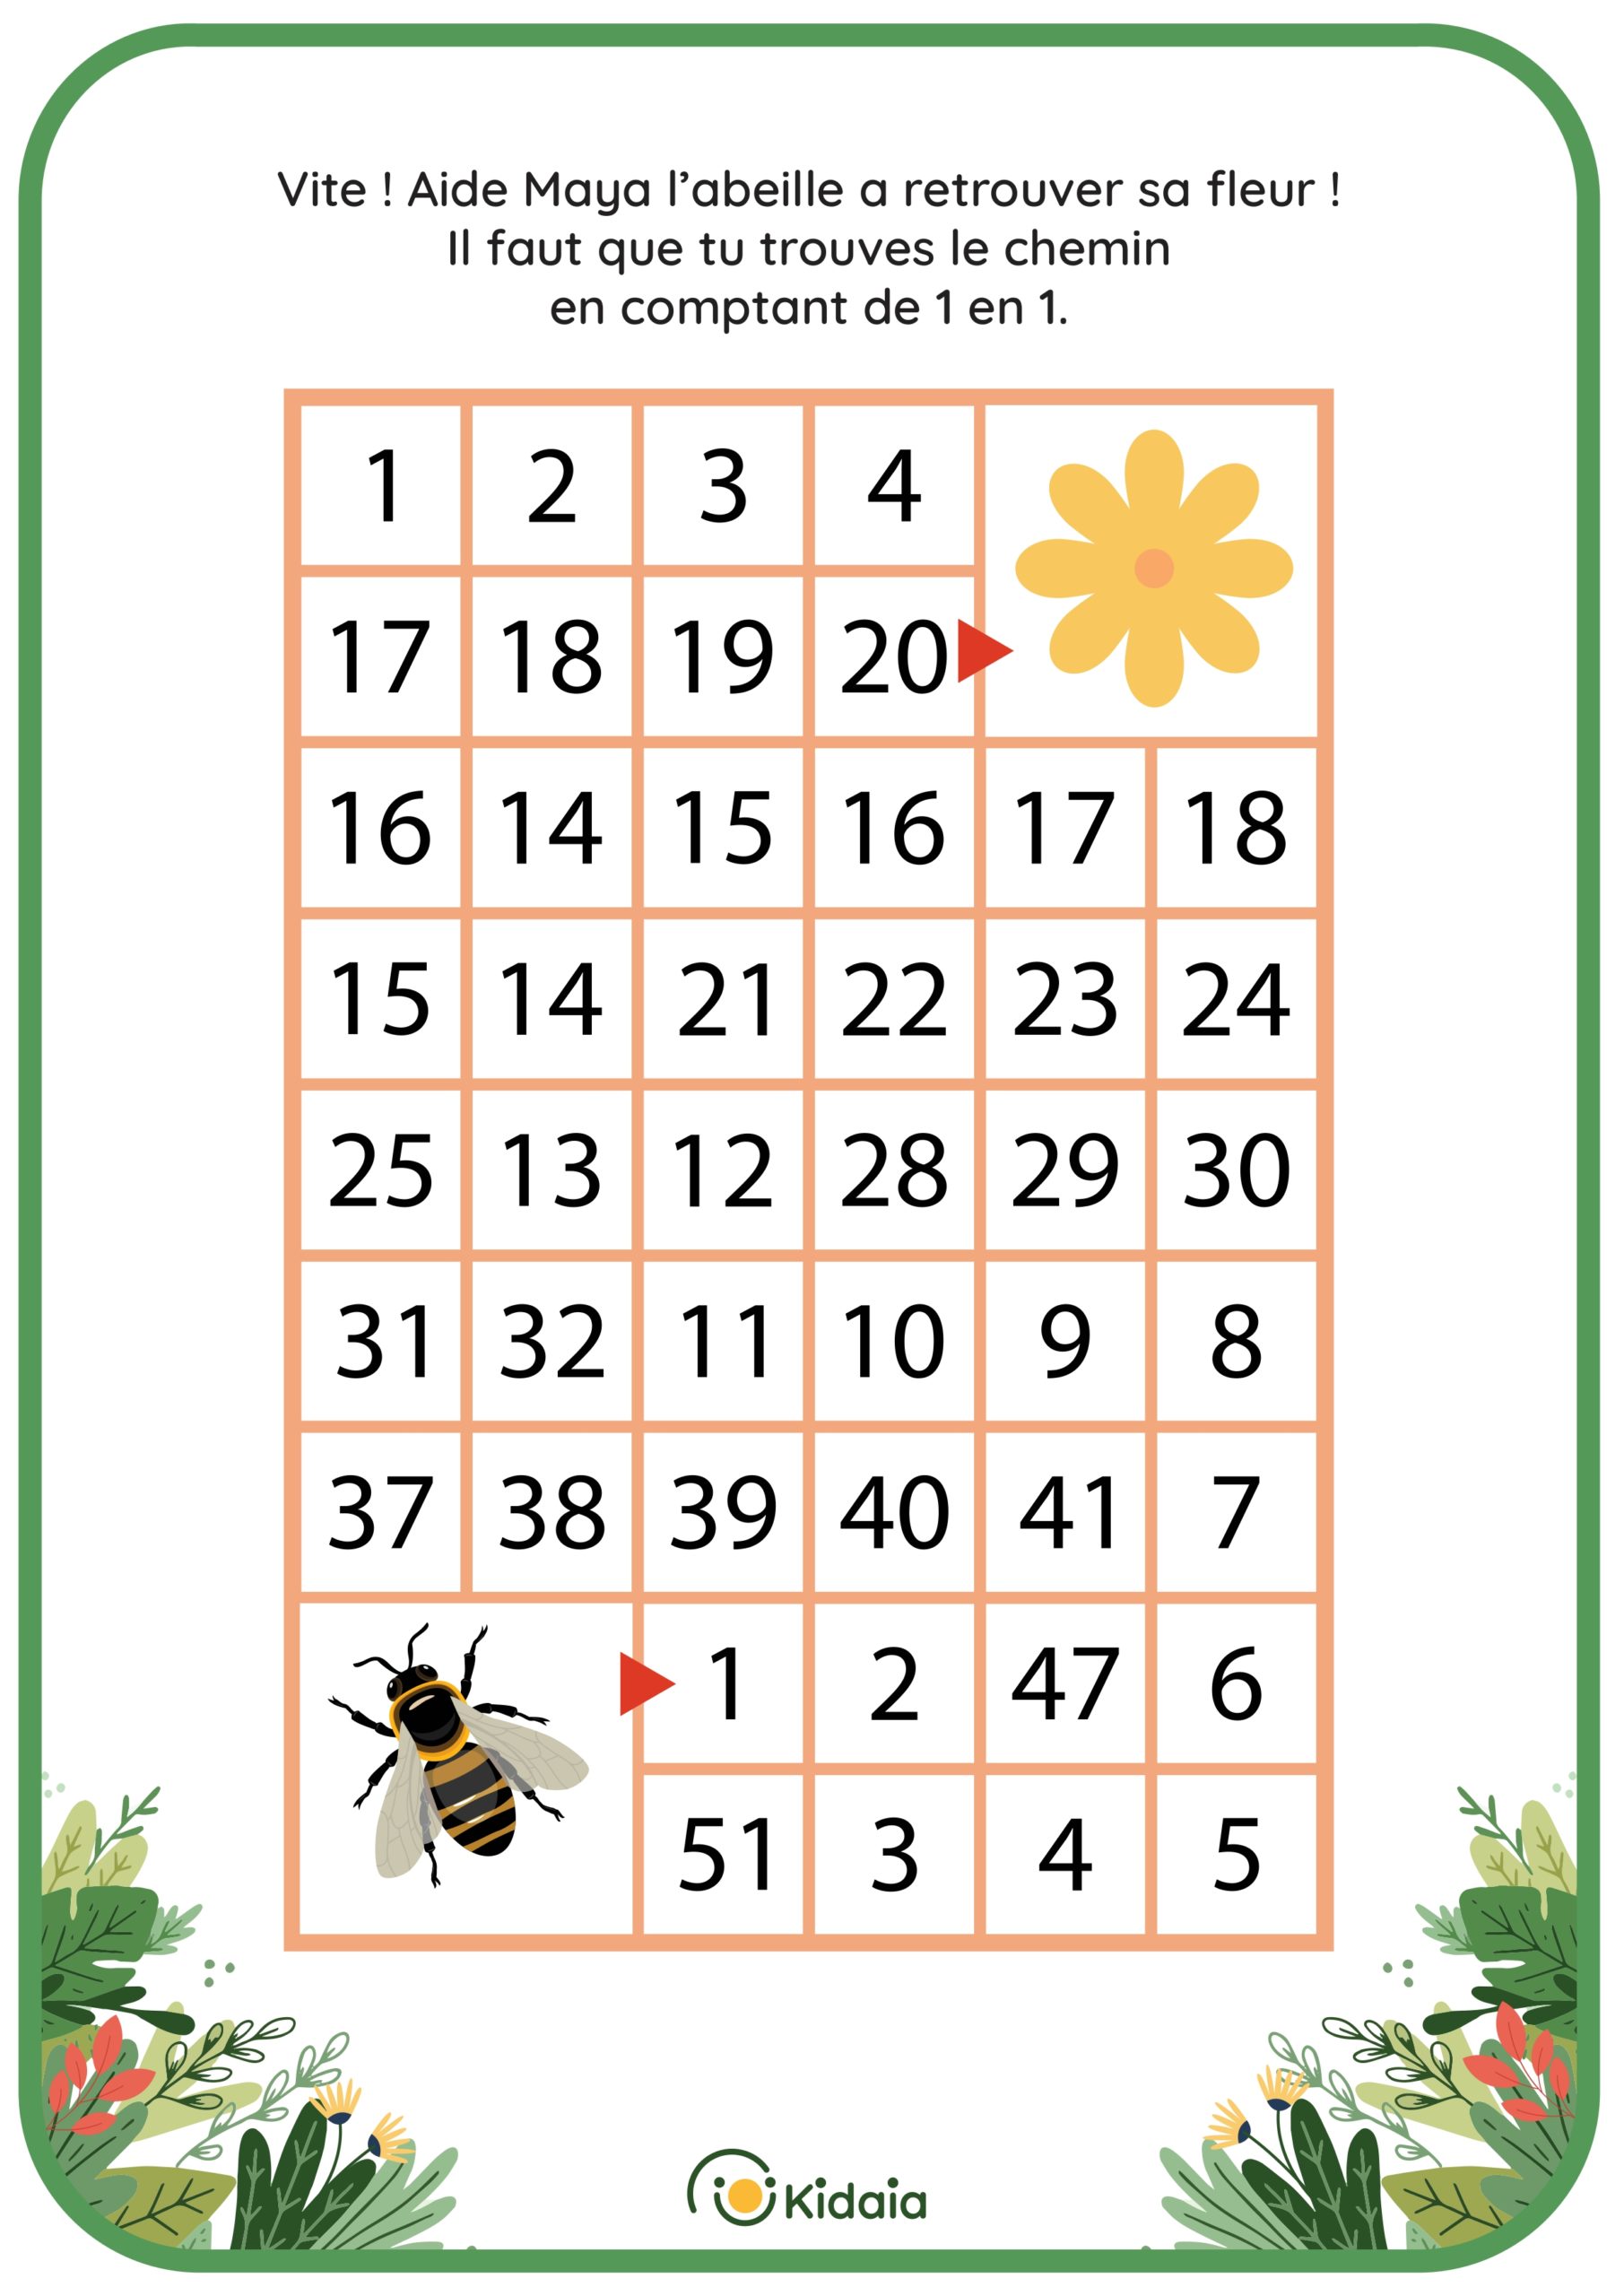 Les insectes pollinisateurs - KIDAIA_page-0006